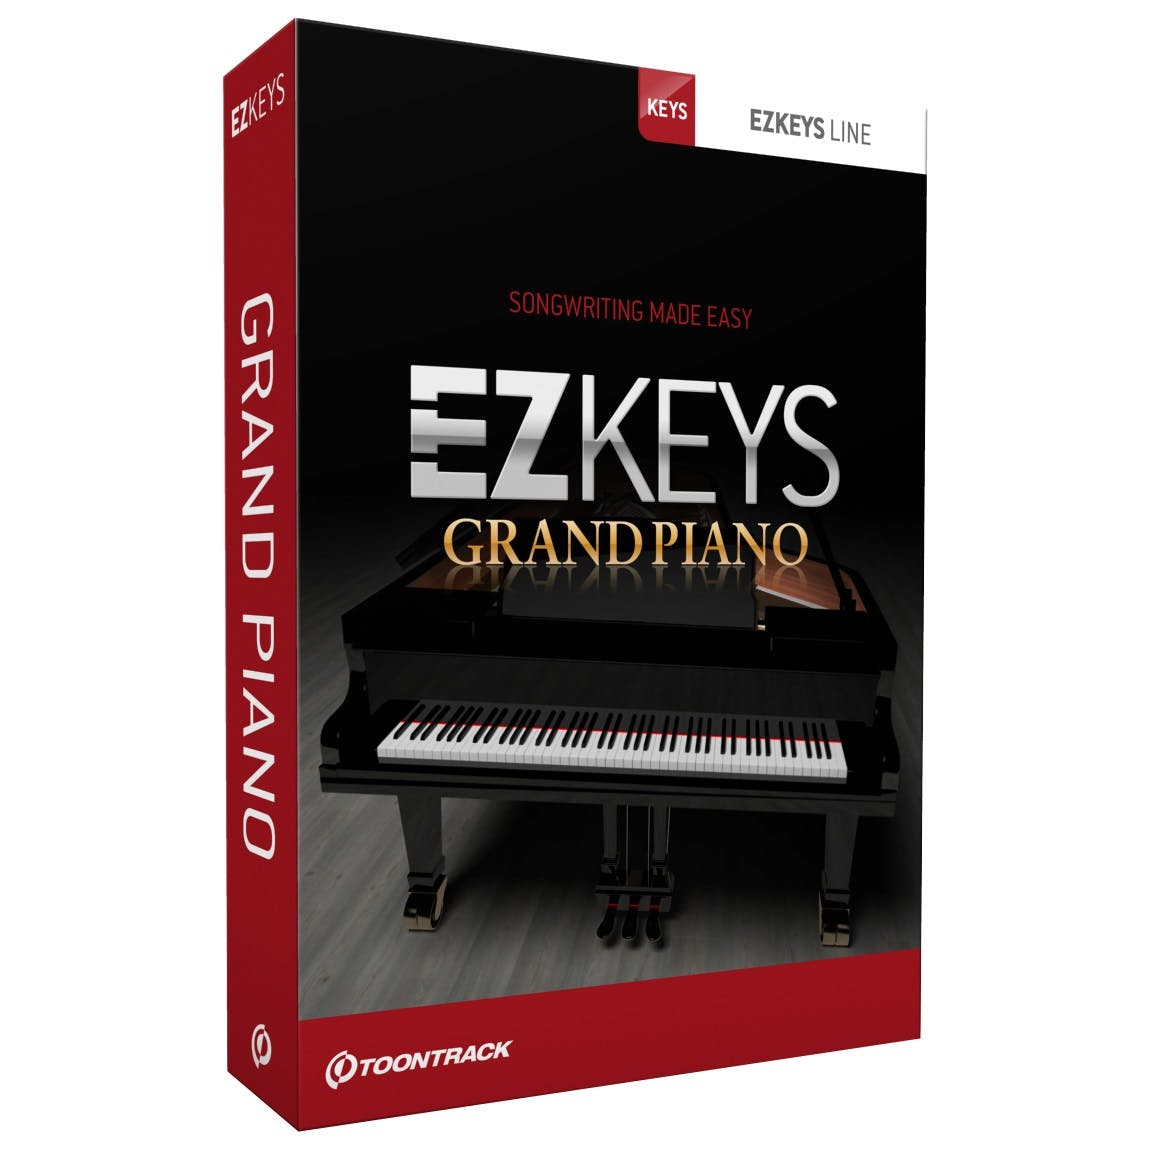 ezkeys grand piano download full